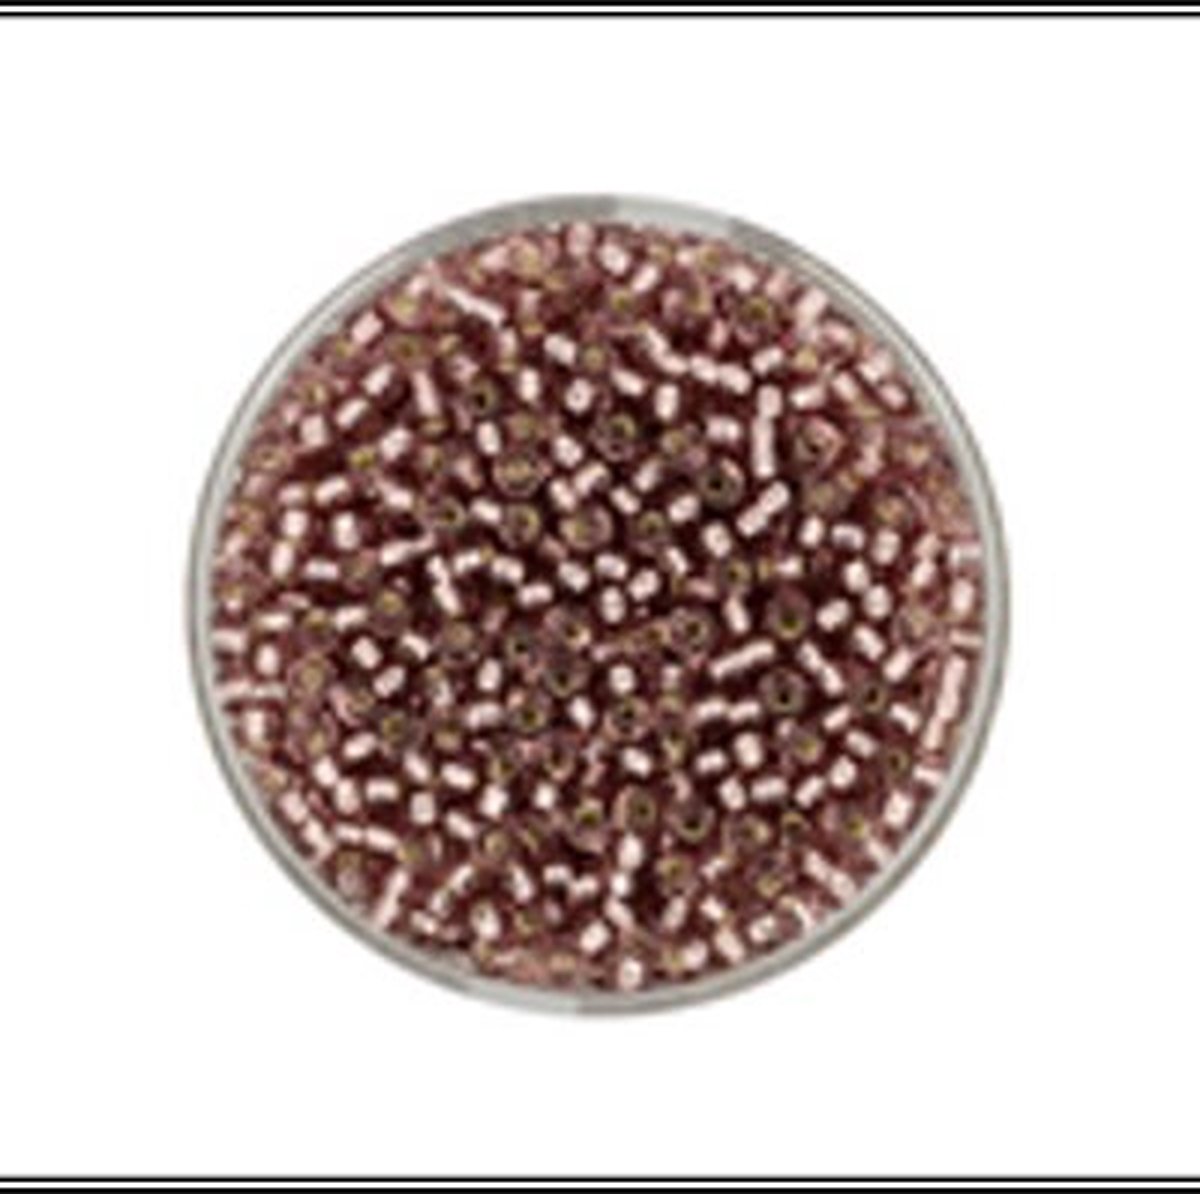 9660-374 Jap. Miyukirocailles - 2,2mm - silverlined amethyst - 12 gram